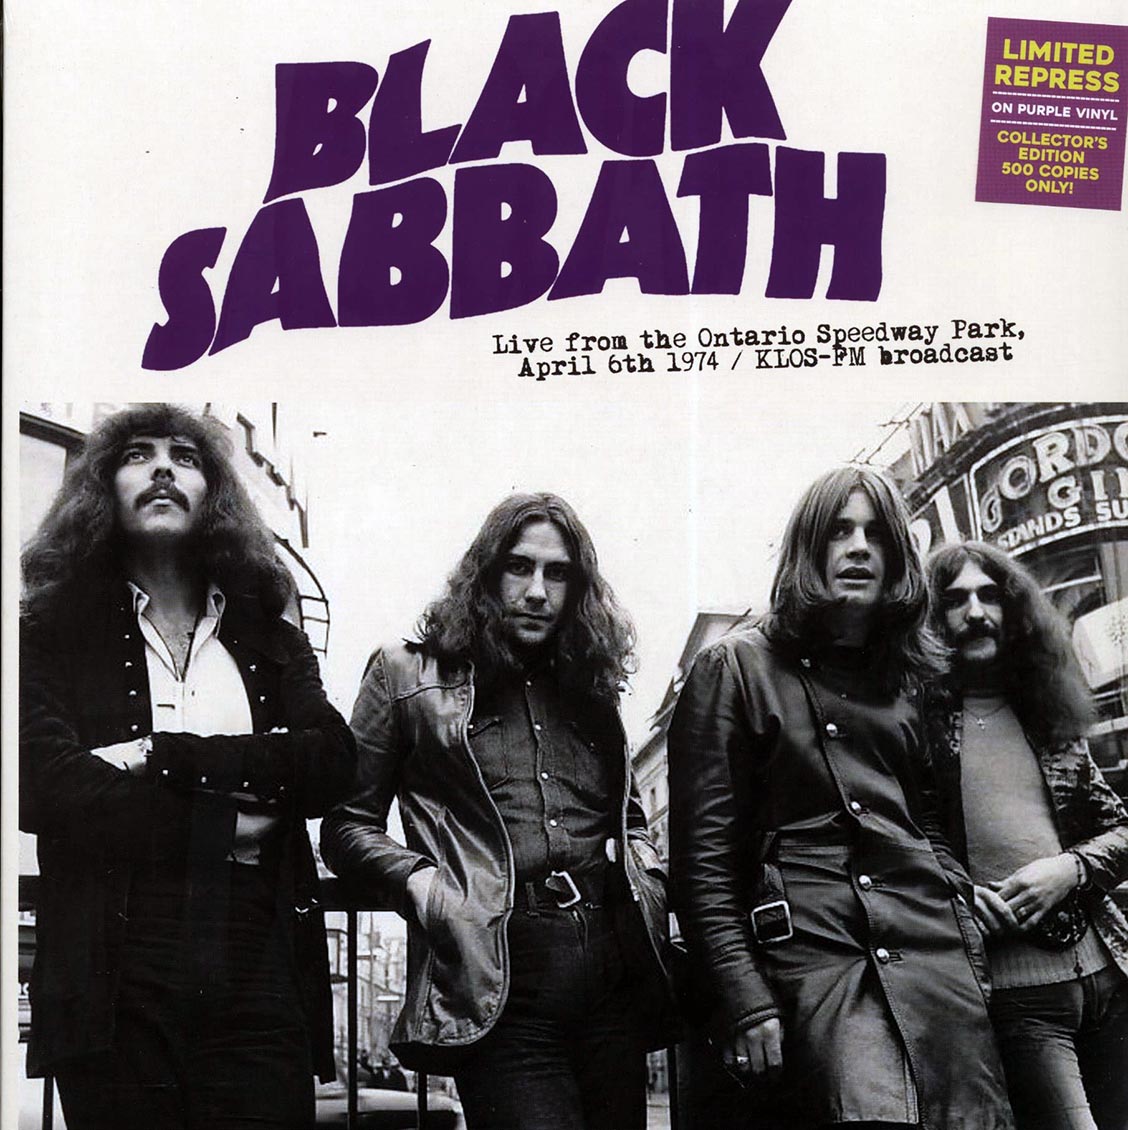 Black Sabbath "Live From The Ontario Speedway Park, April 6th 1974" LP